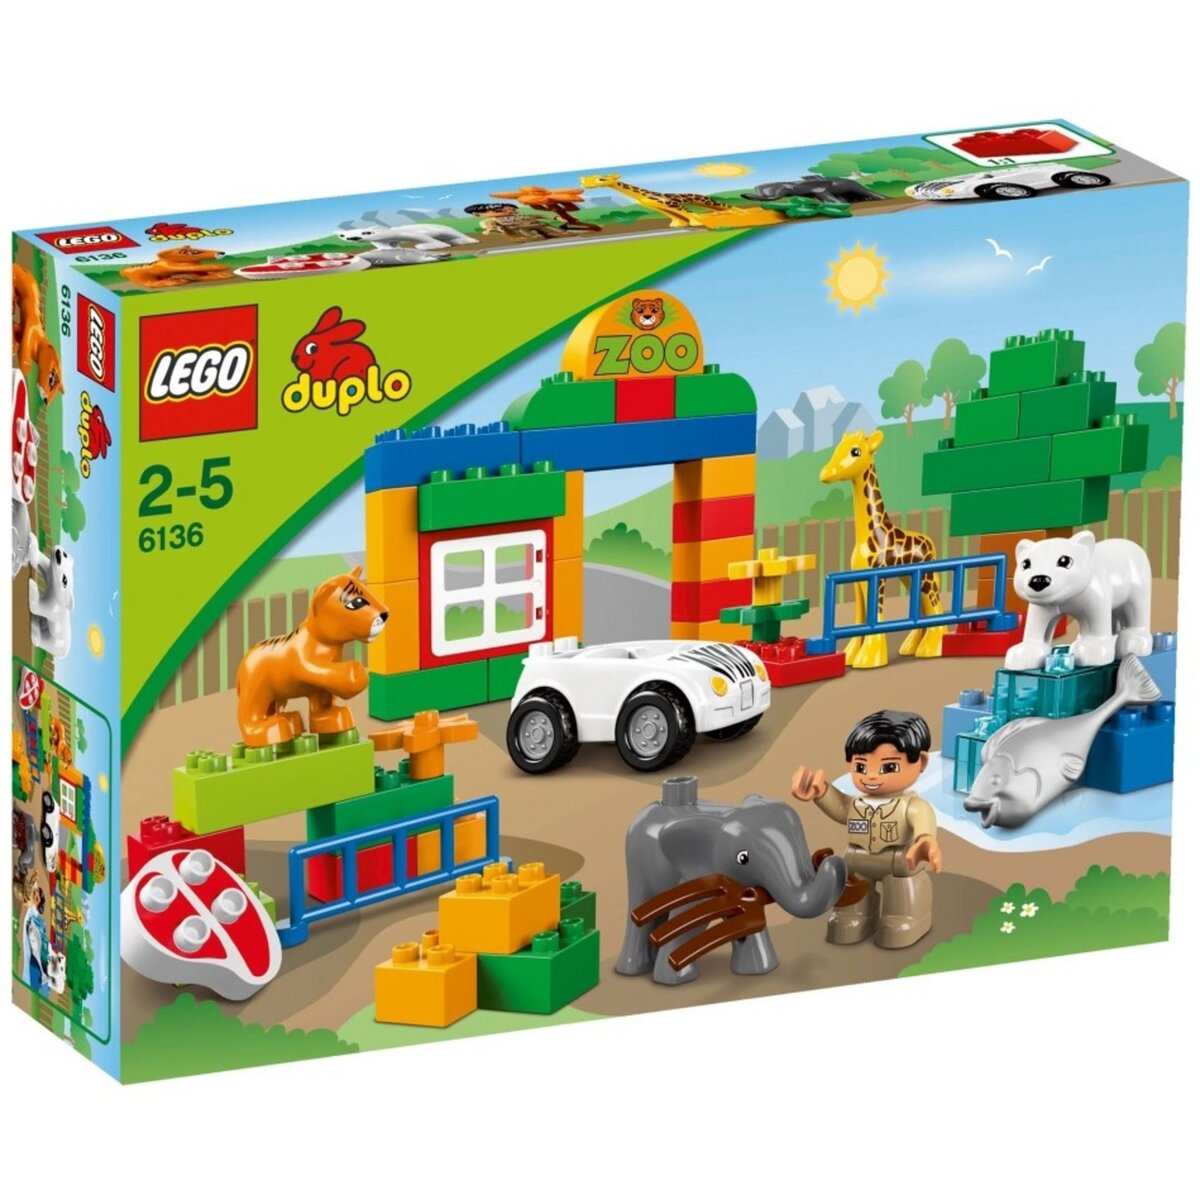 LEGO Duplo 6136 Mon premier zoo